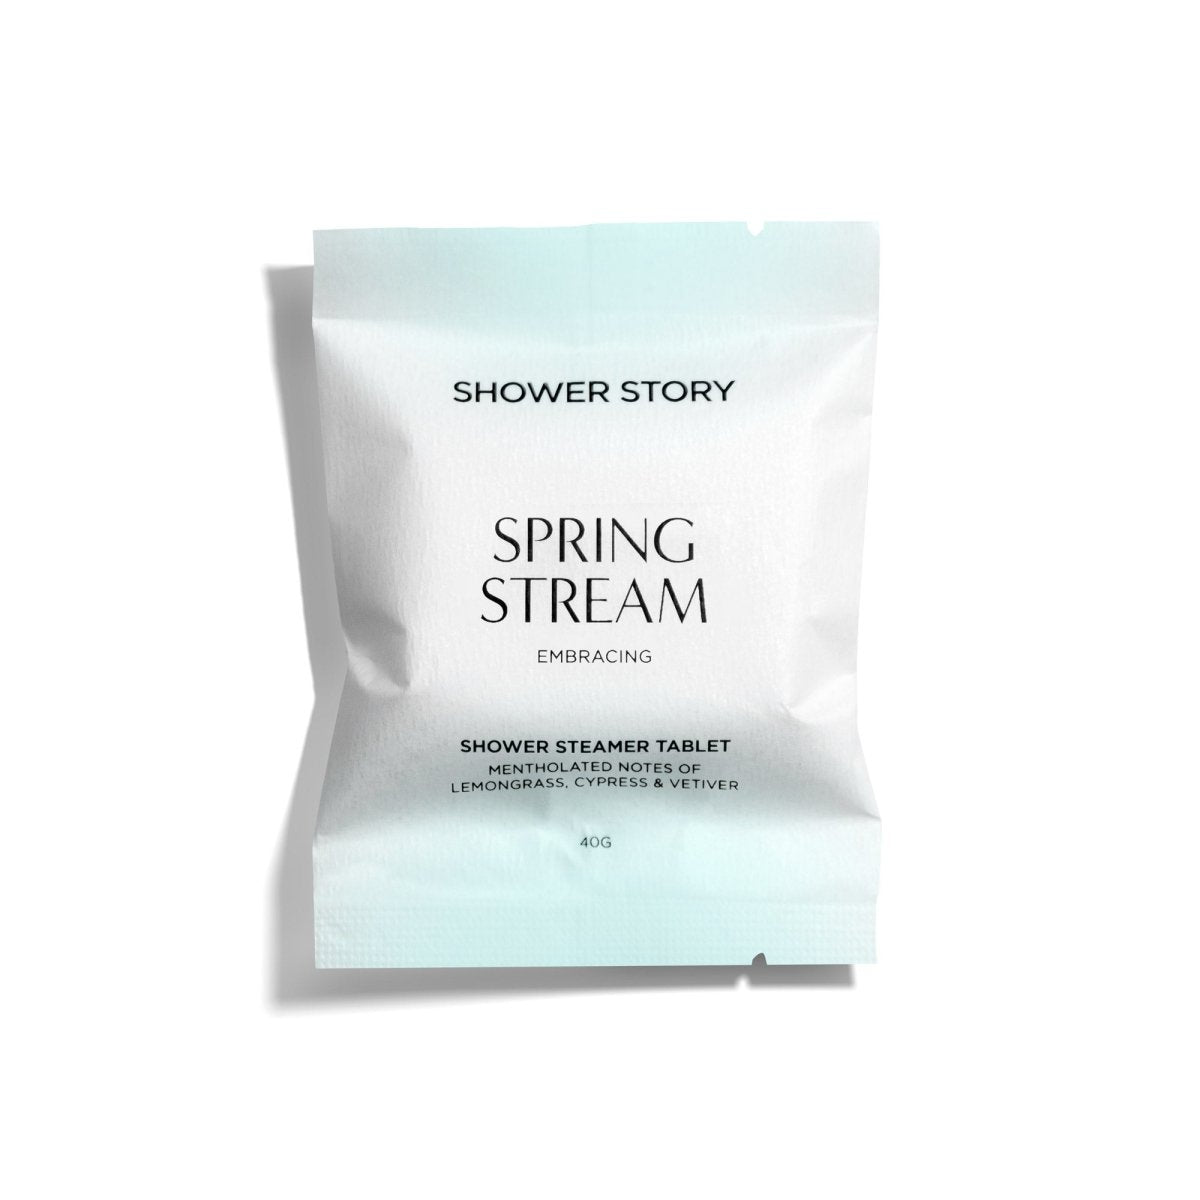 SHOWER STORY_[NEW] SPRING STREAM – Embracing | Mentholated Shower Steamer Set (10 Tablets)_Shower Steamer Daily Set_SSSSDX10